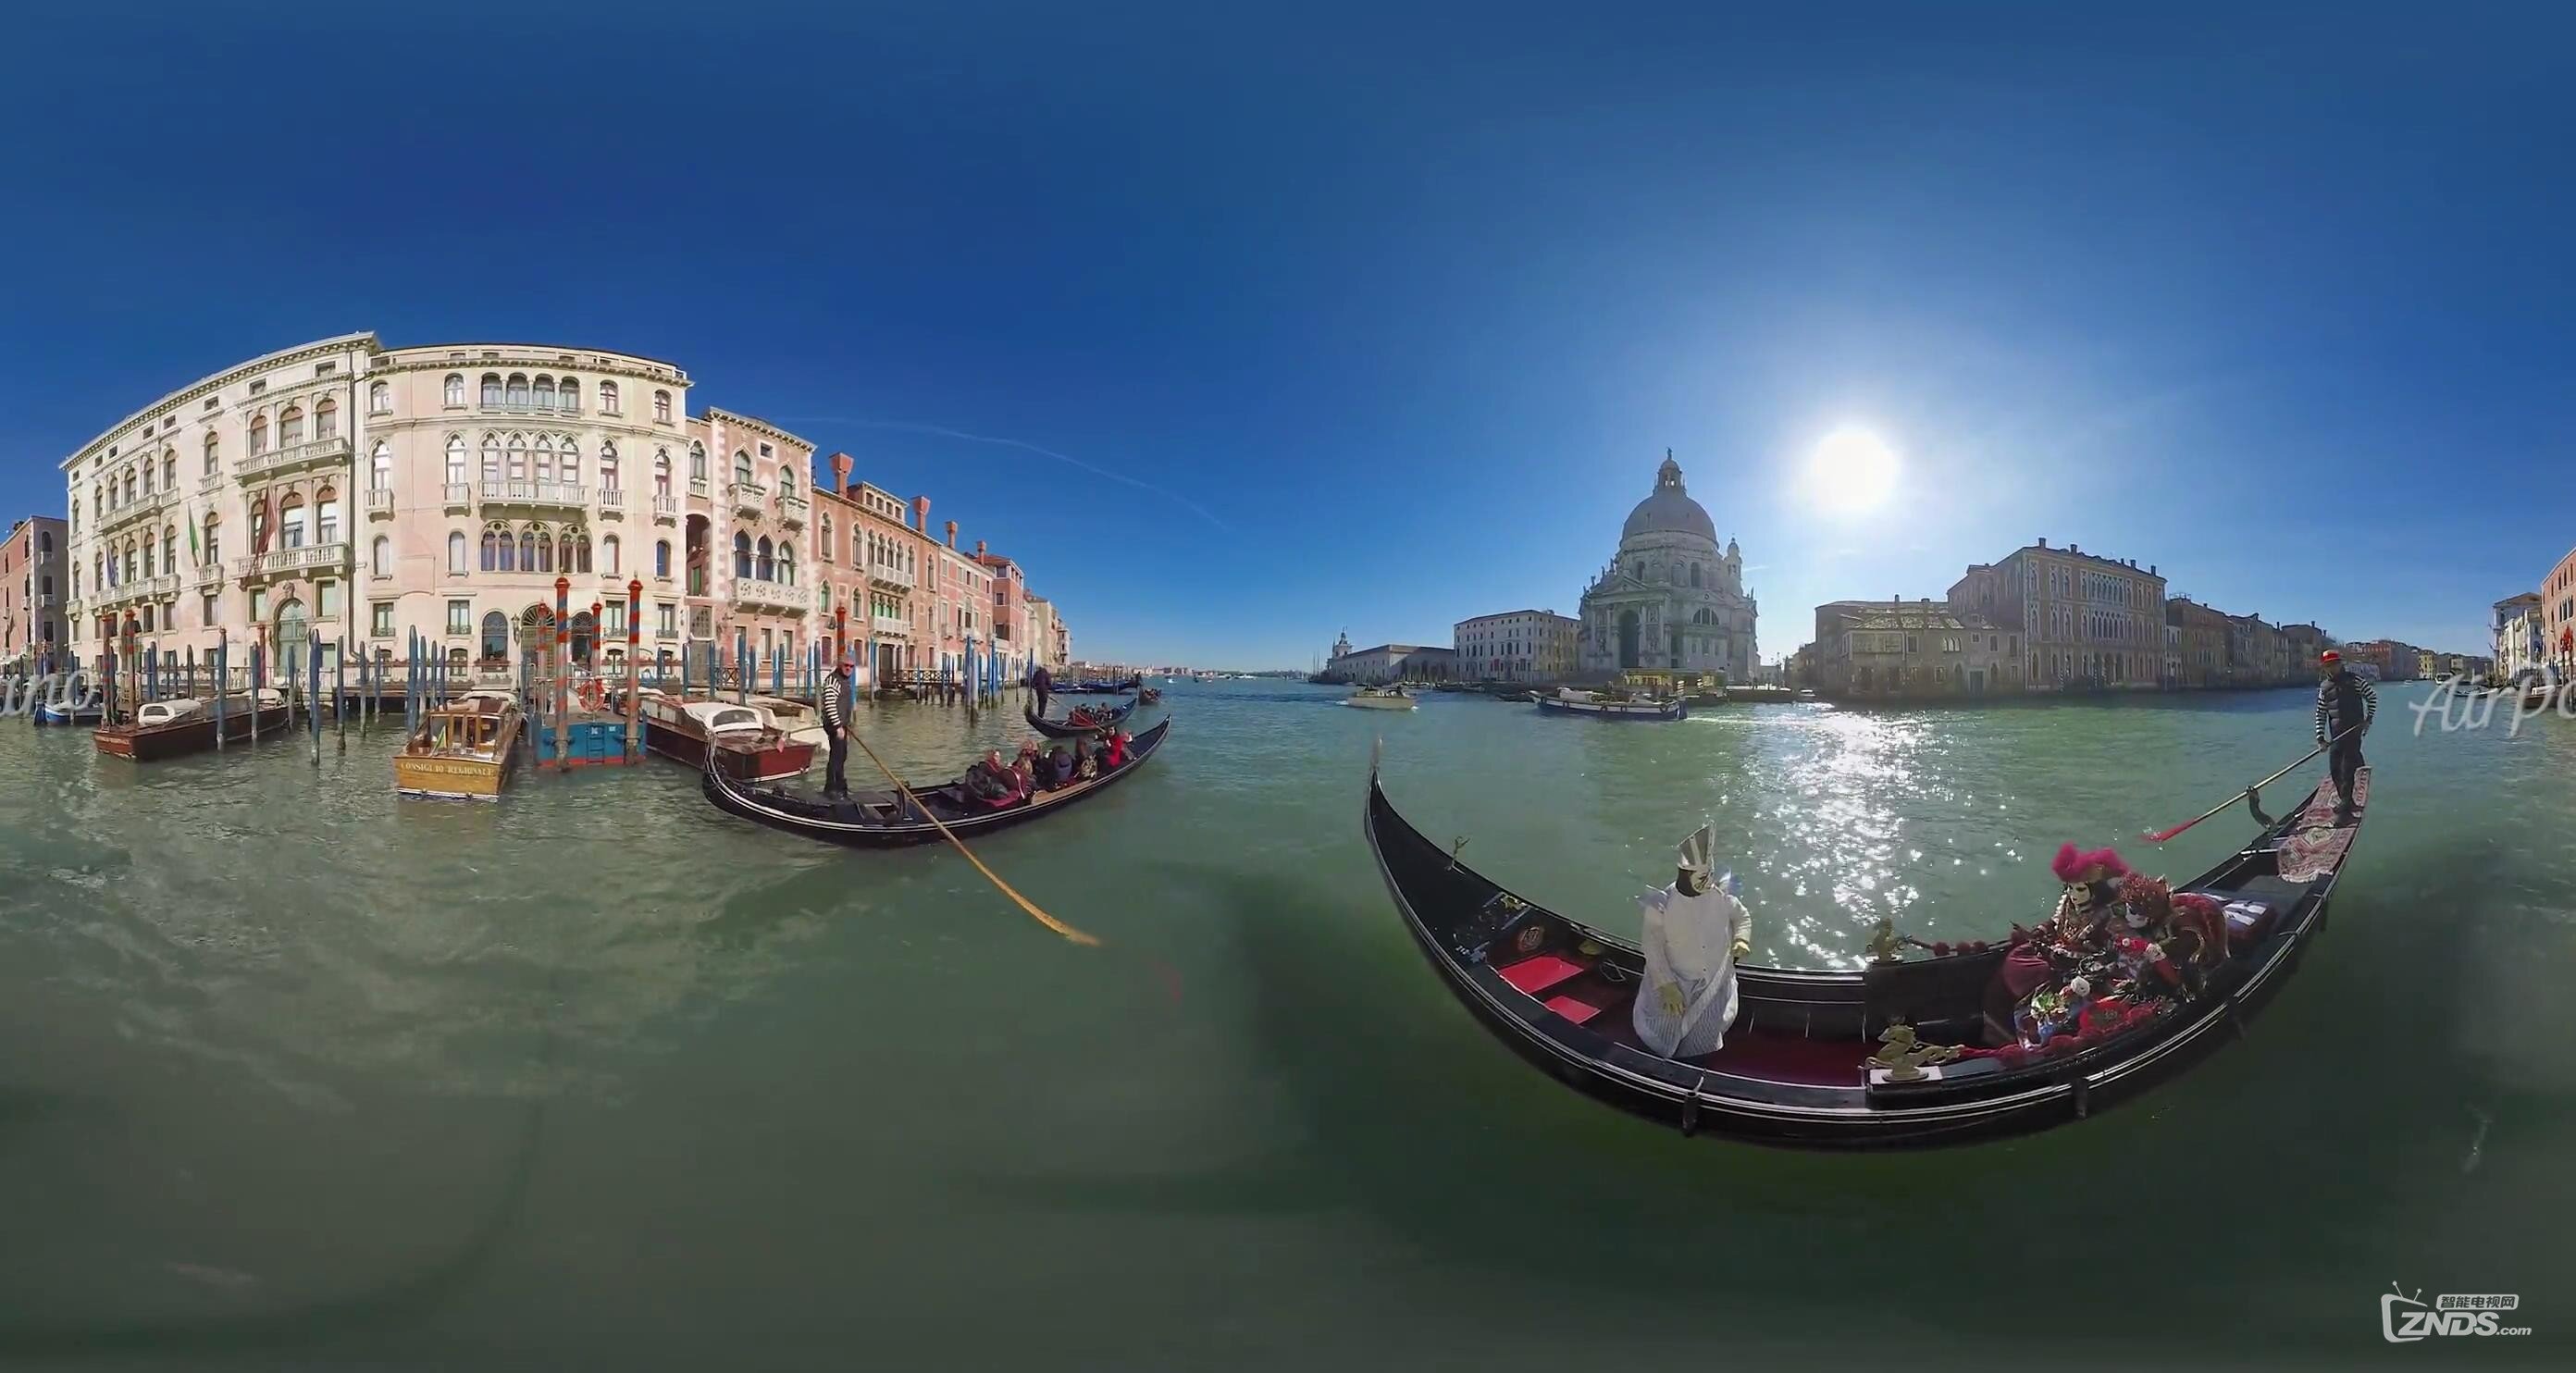 【VR带你游世界】360_vr_全景_虚拟现实_威尼斯－意大利狂欢节_河岸游览_第二章_PART_I.jpg